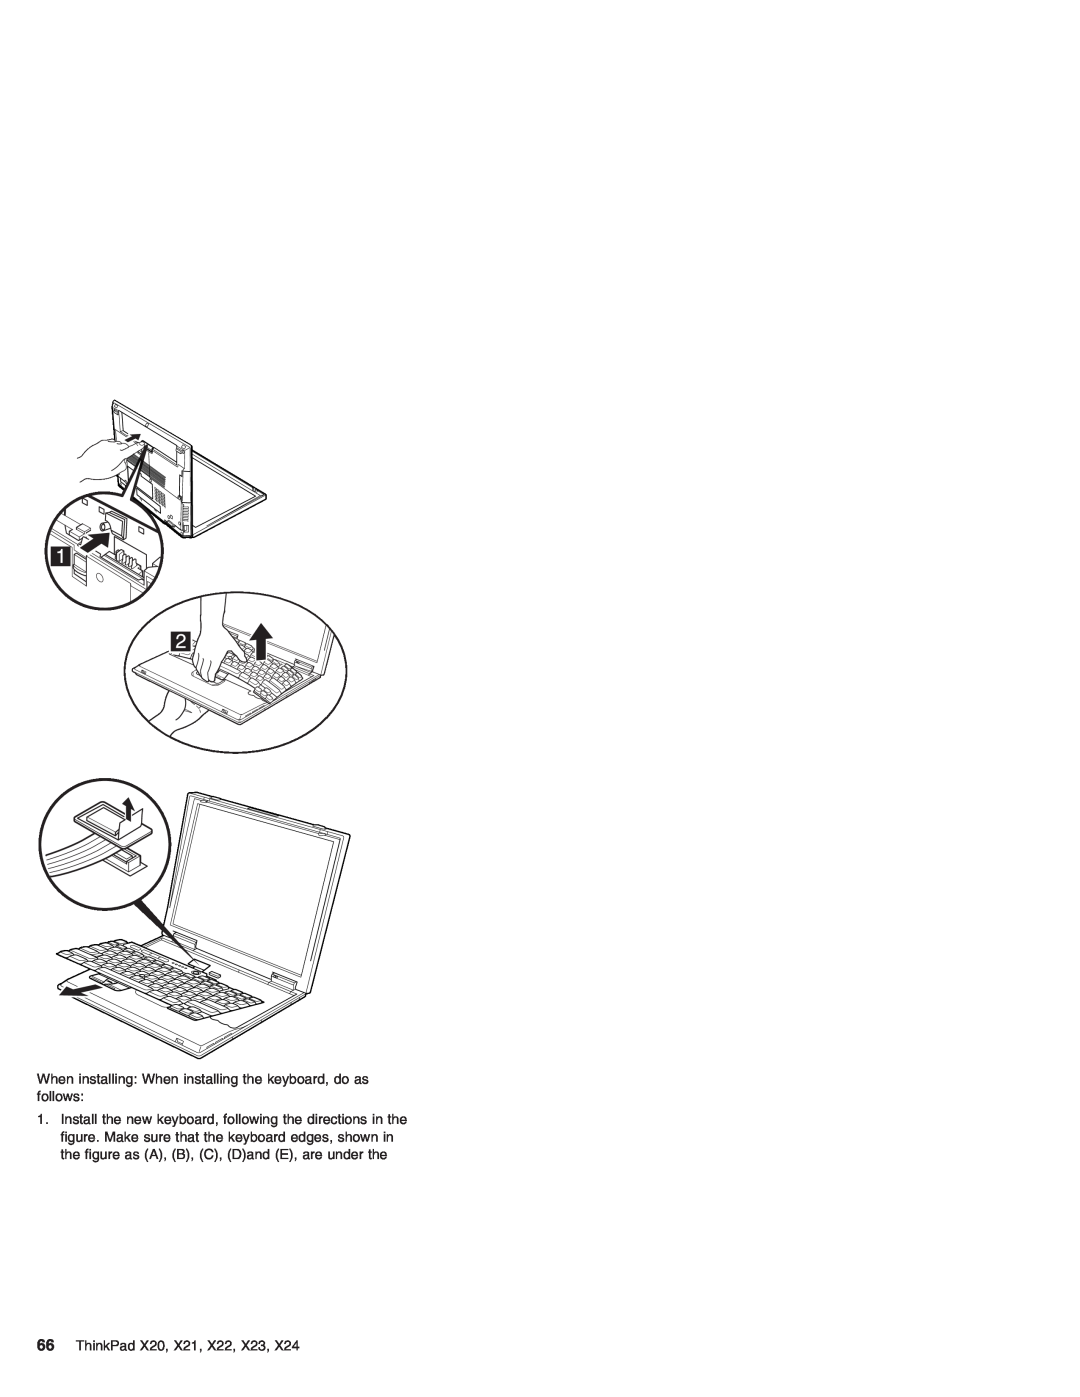 IBM X24 manual When installing When installing the keyboard, do as follows, ThinkPad X20, X21, X22, X23 